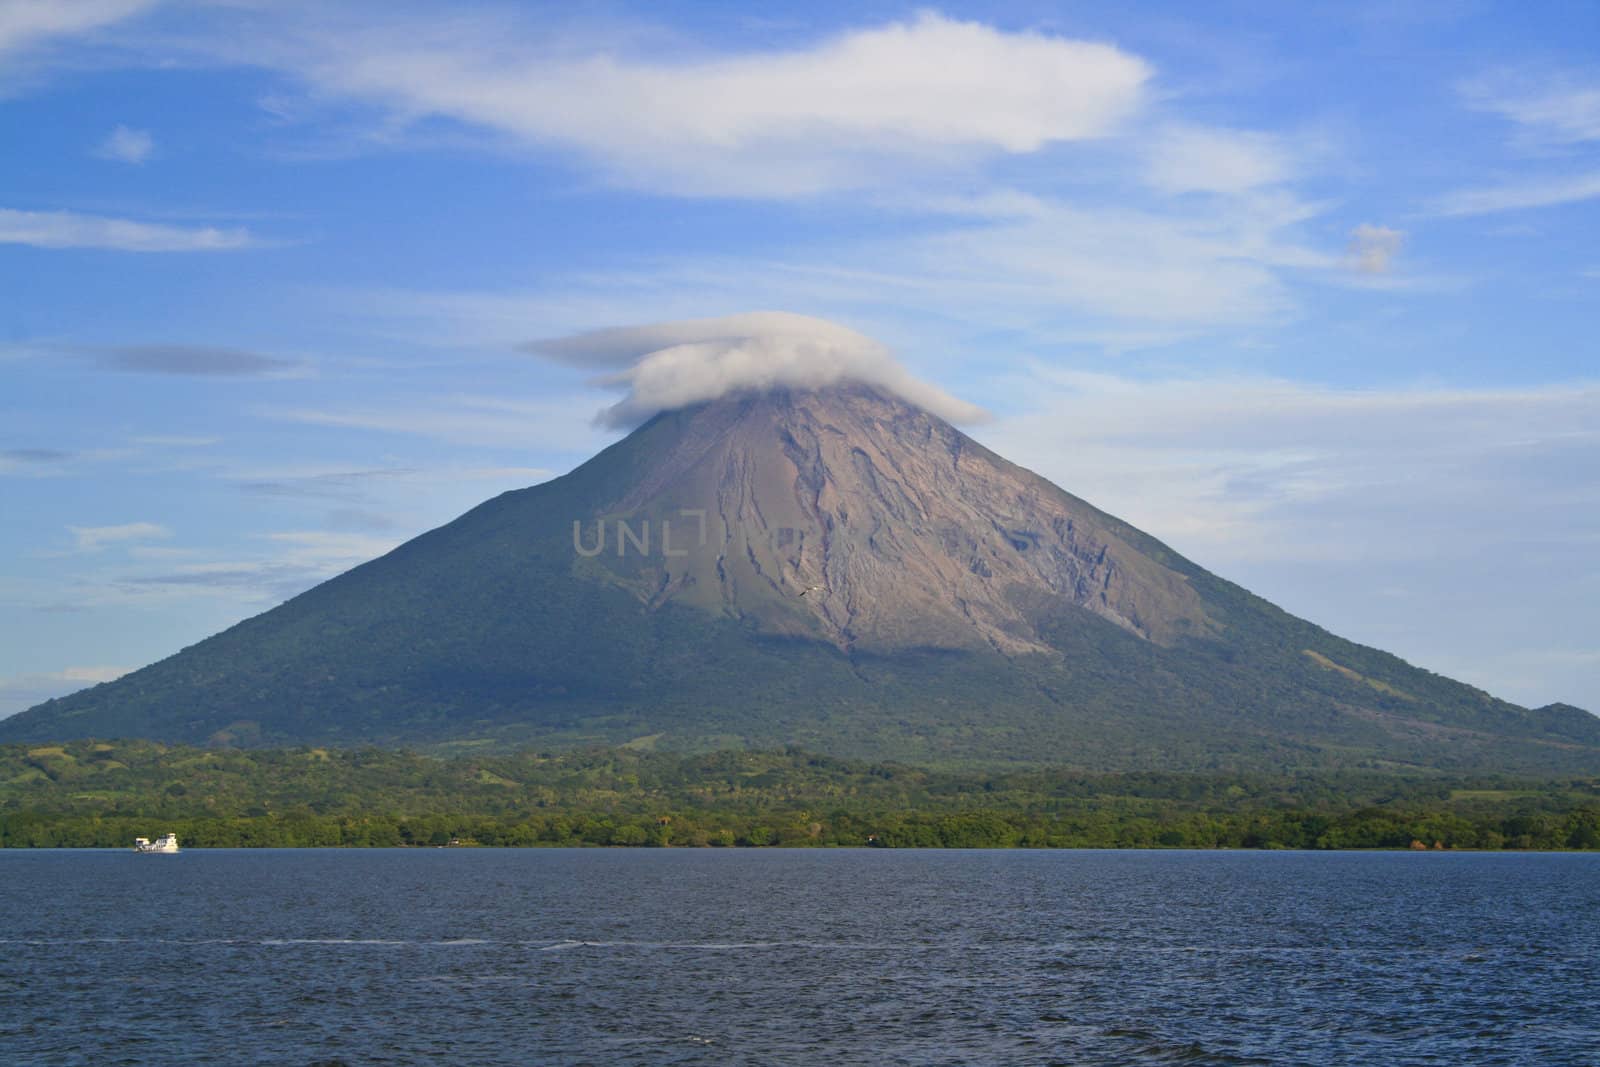 The volcano Concepción in Nicaragua